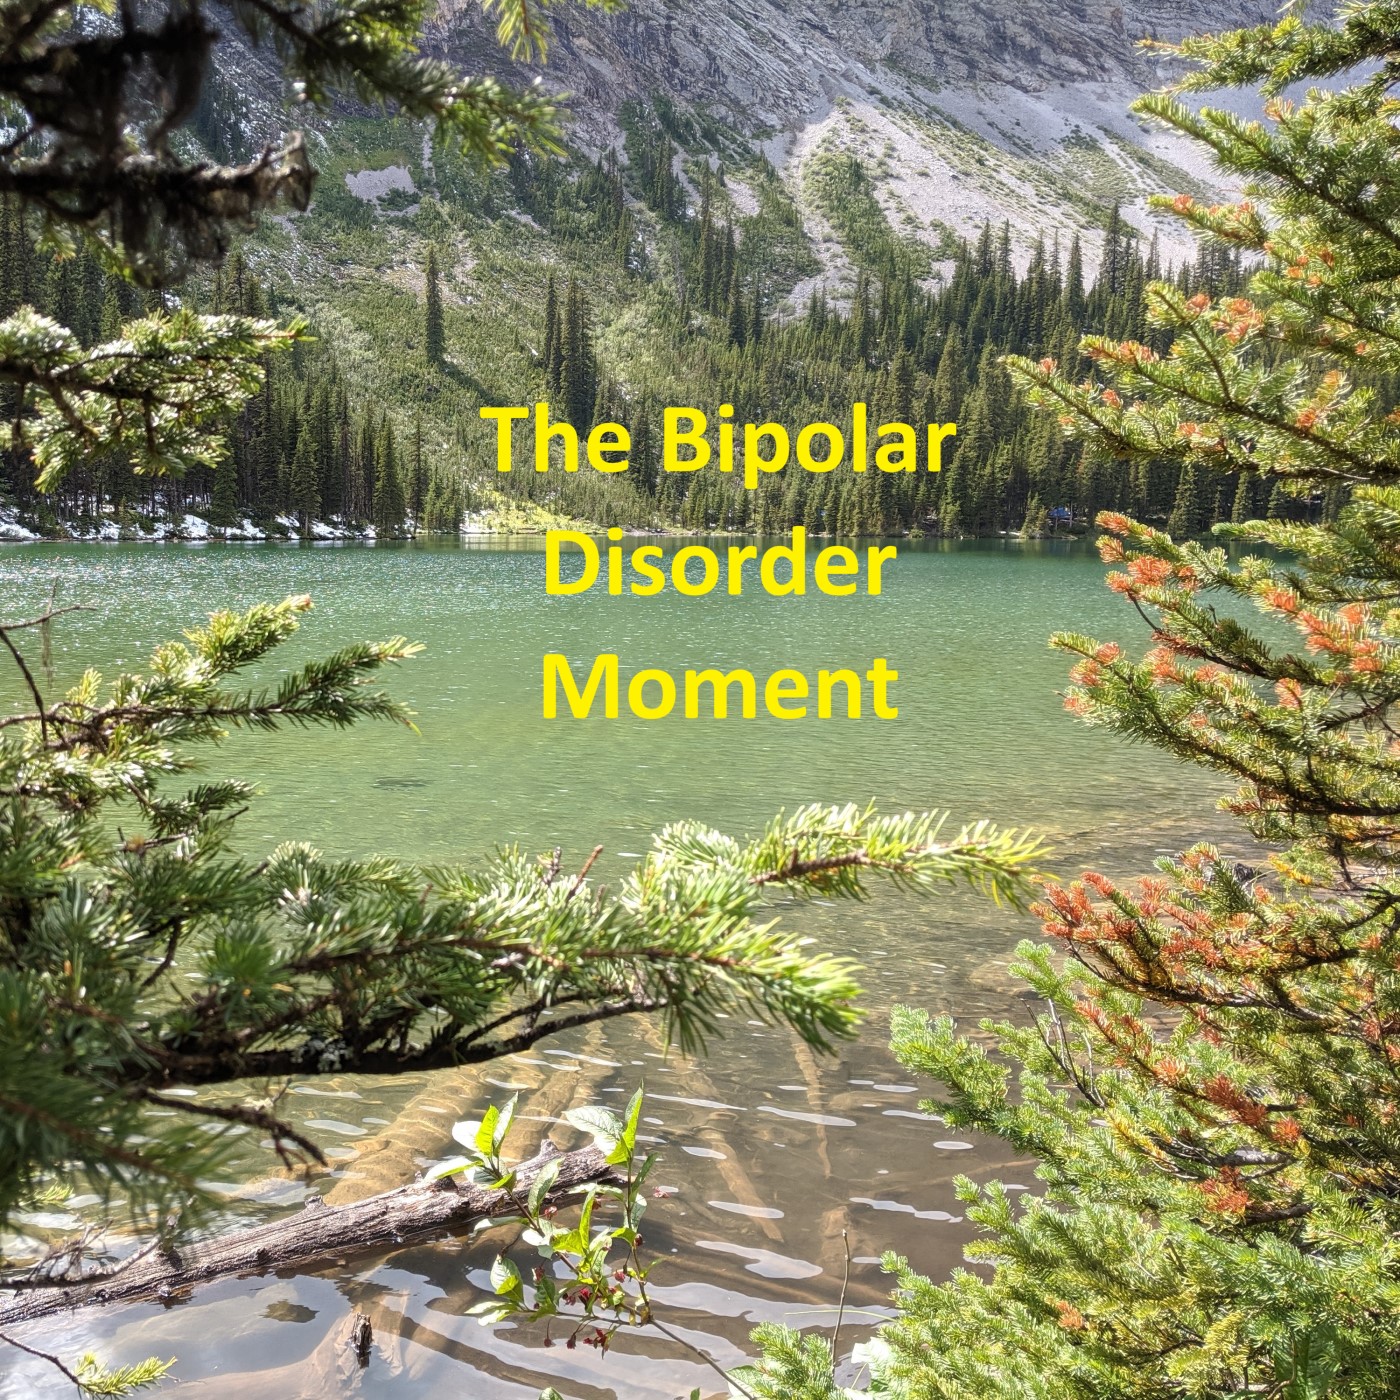 The Bipolar Disorder Moment